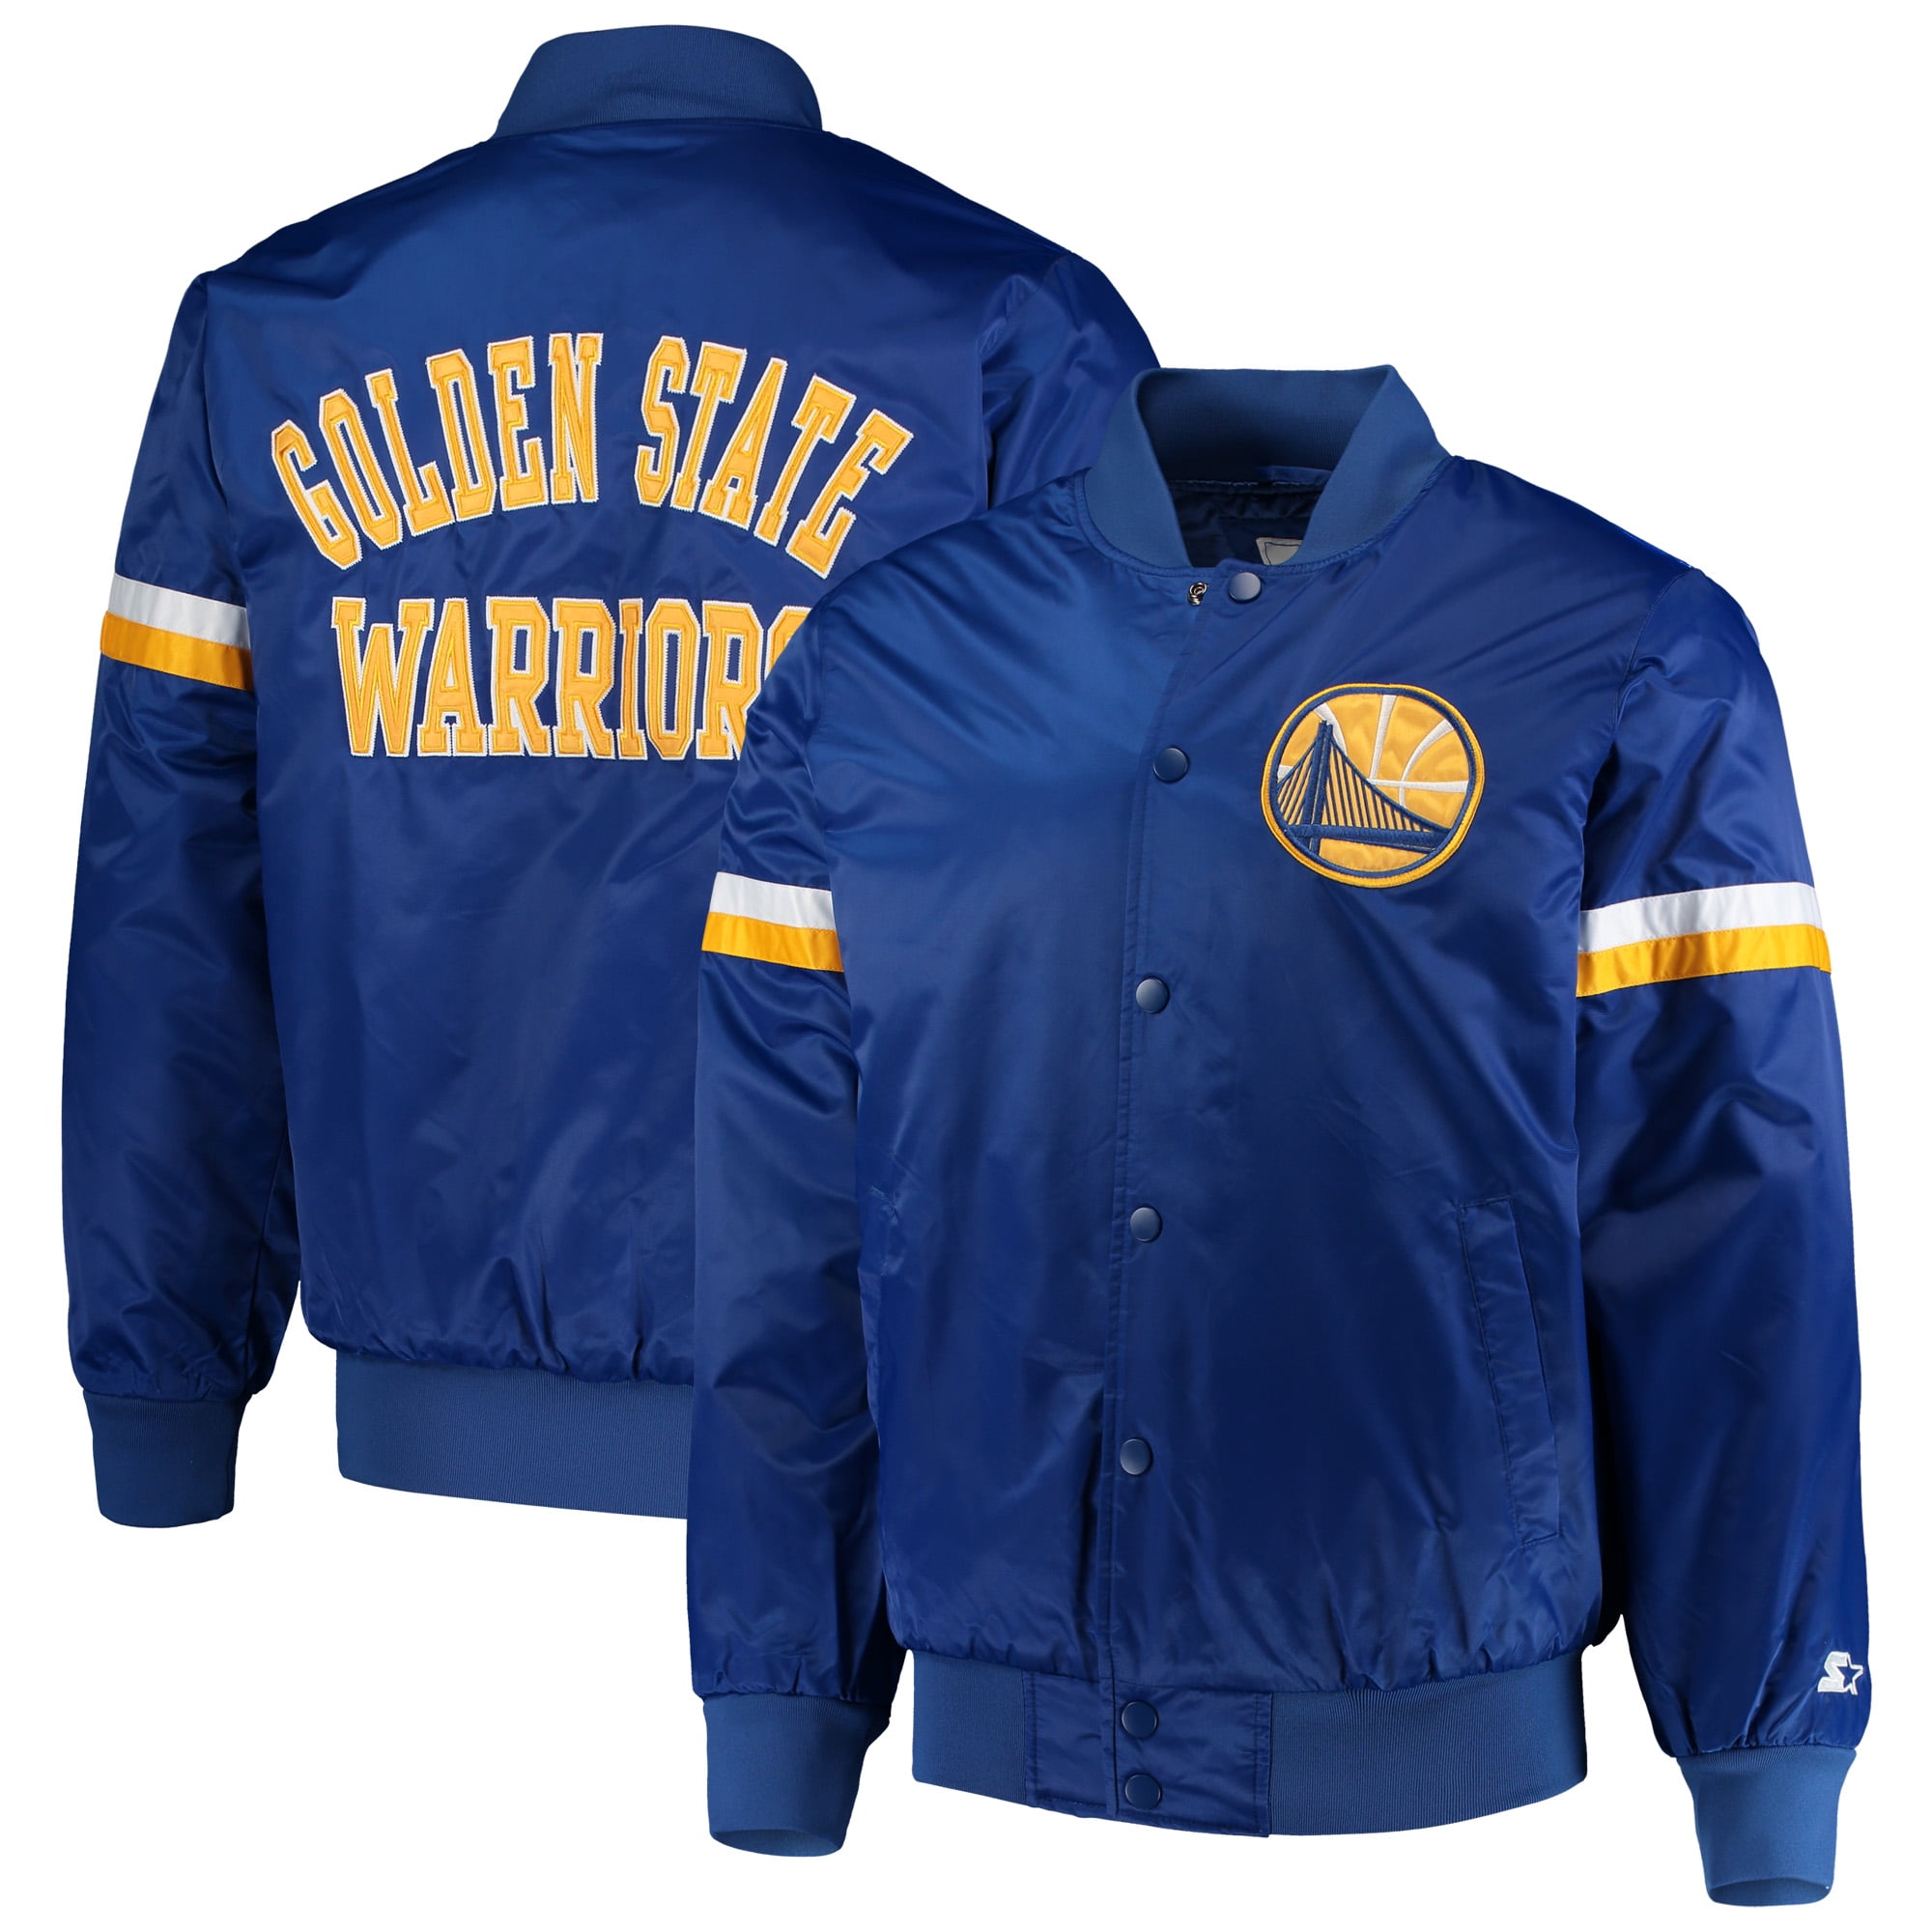 Golden State Warriors Starter The Champ Varsity Satin Jacket - Royal - Walmart.com2000 x 2000